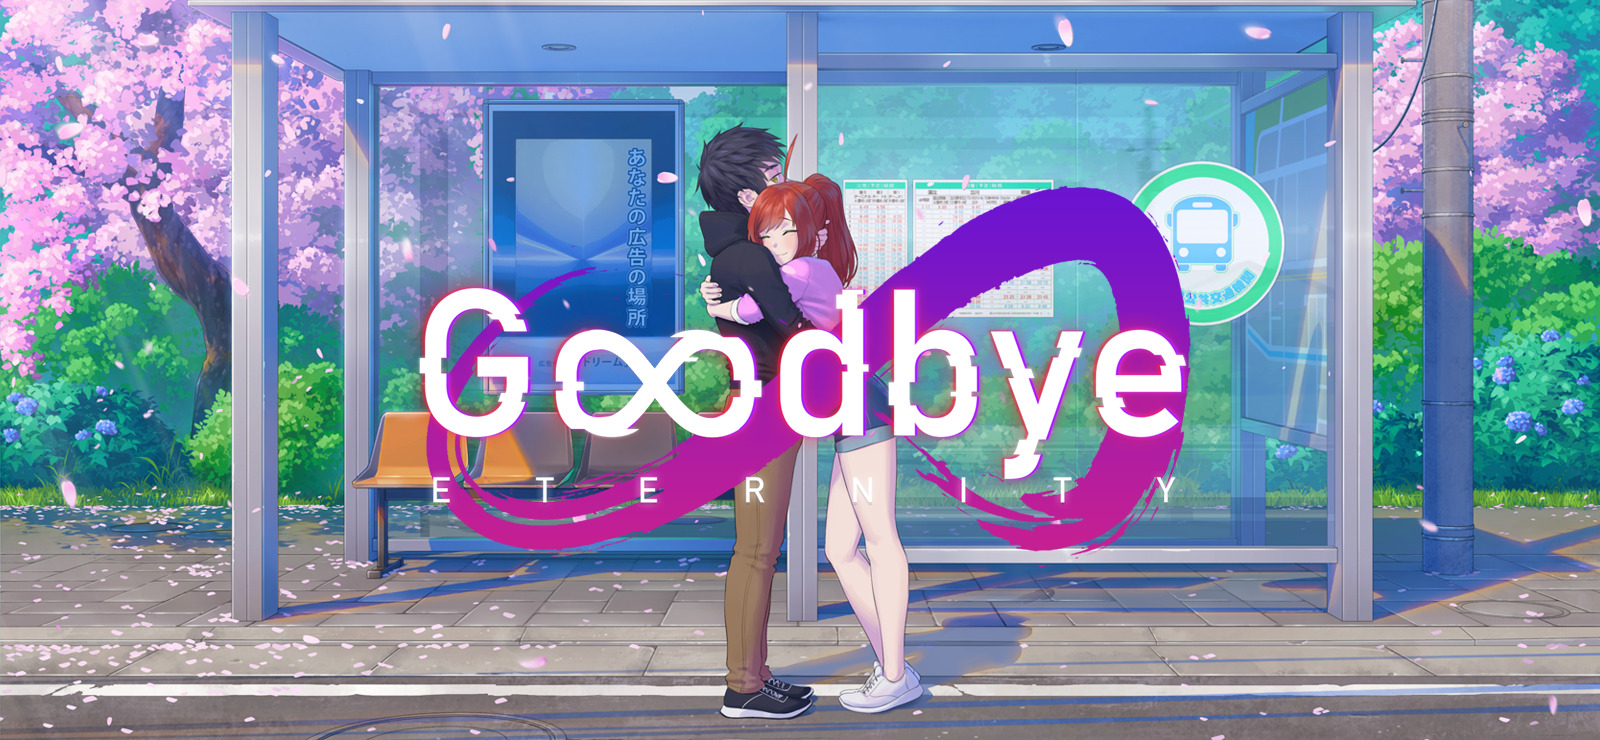 Goodbye eternity all scenes